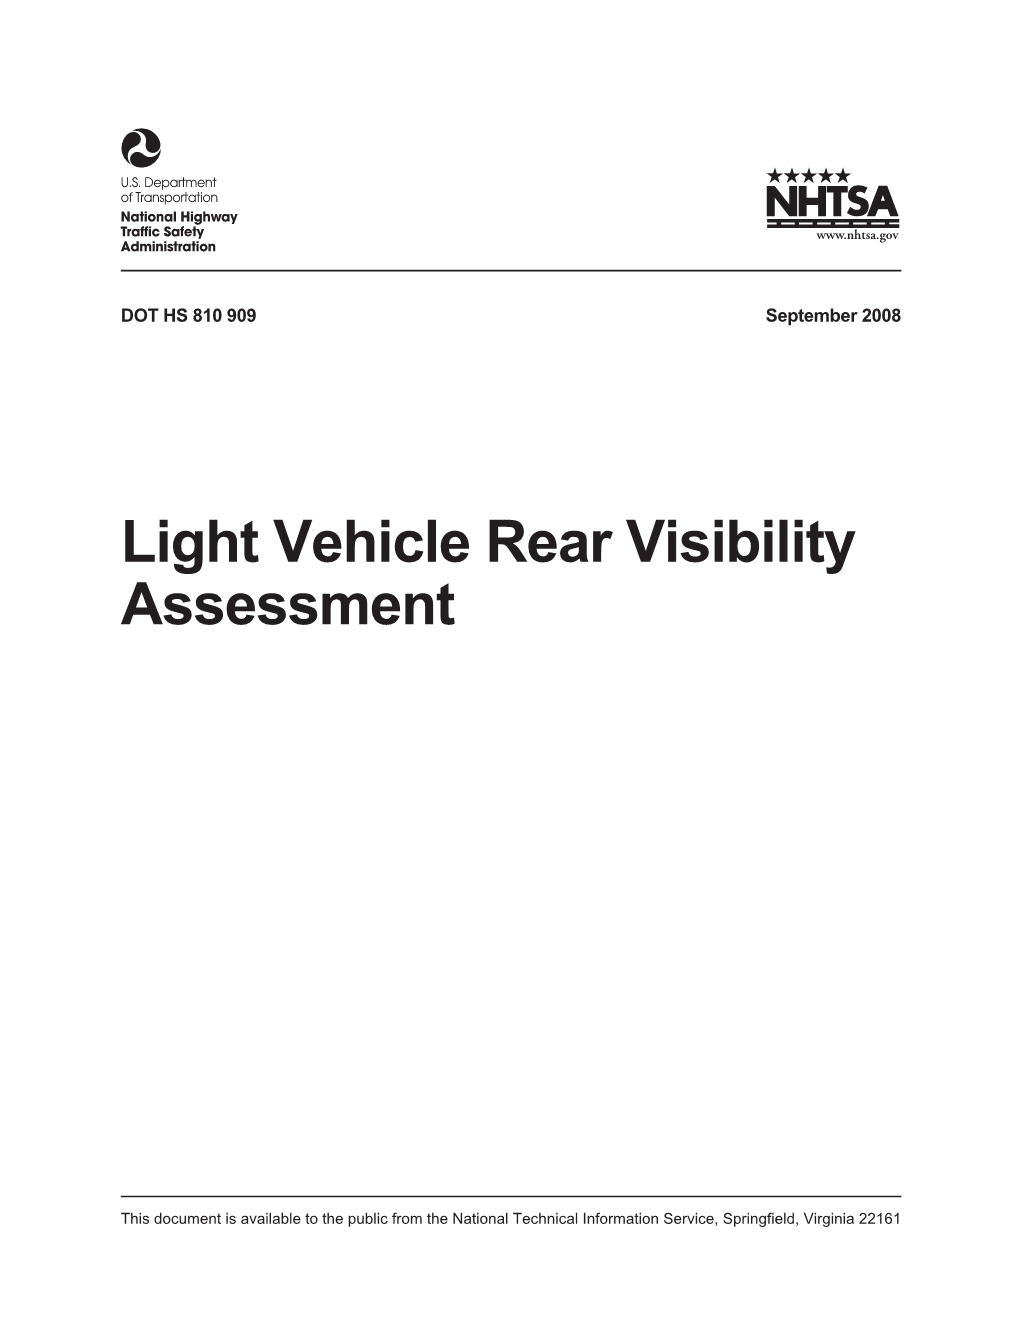 Light Vehicle Rear Visibility Assessment